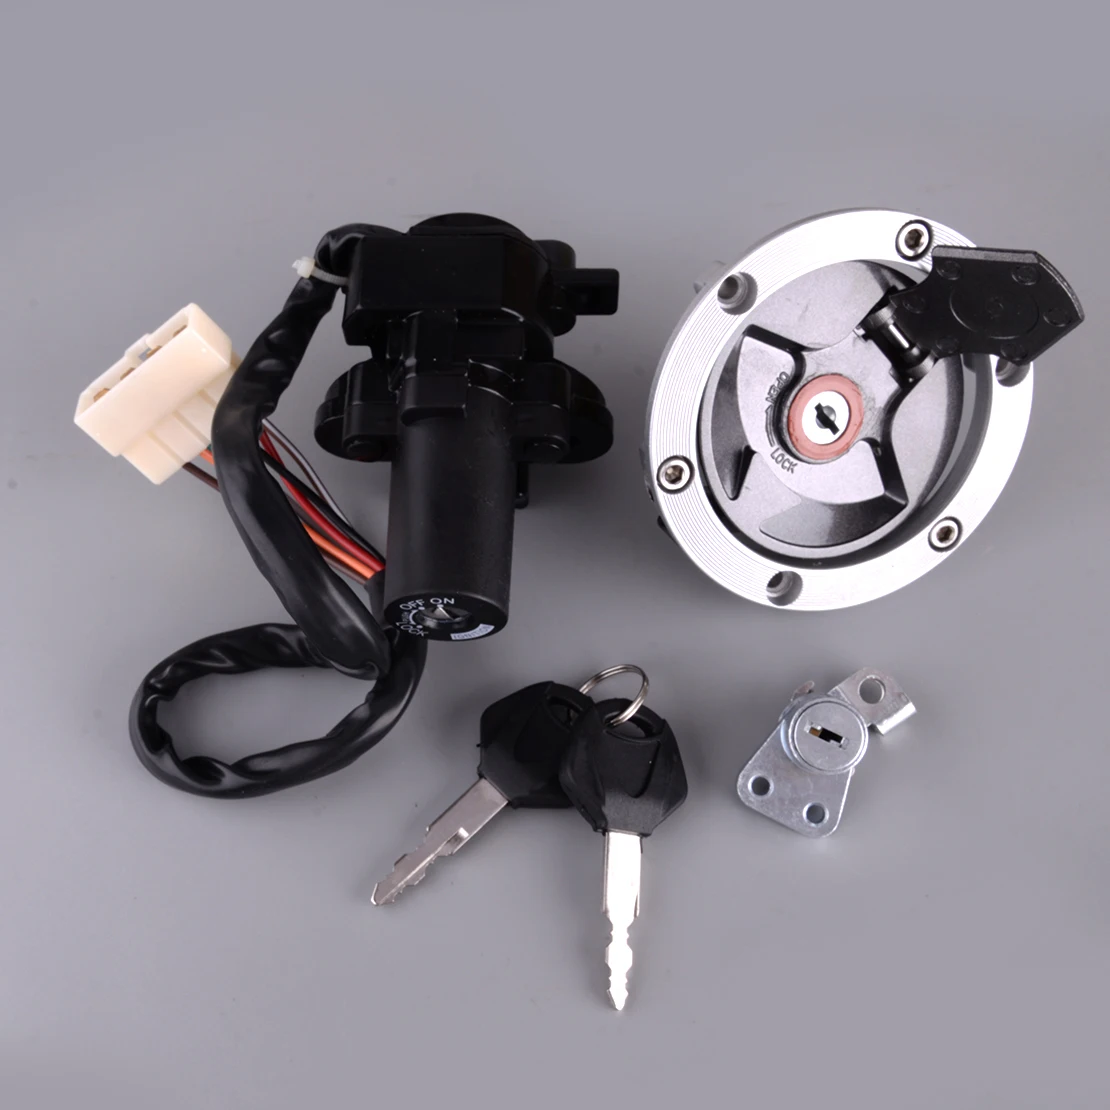 

1 Set Ignition Switch Fuel Gas Tank Cap Cover Lock Keys Motorcycle Fit for Kawasaki Ninja 250R EX250F 1988-2004 2005 2006 2007